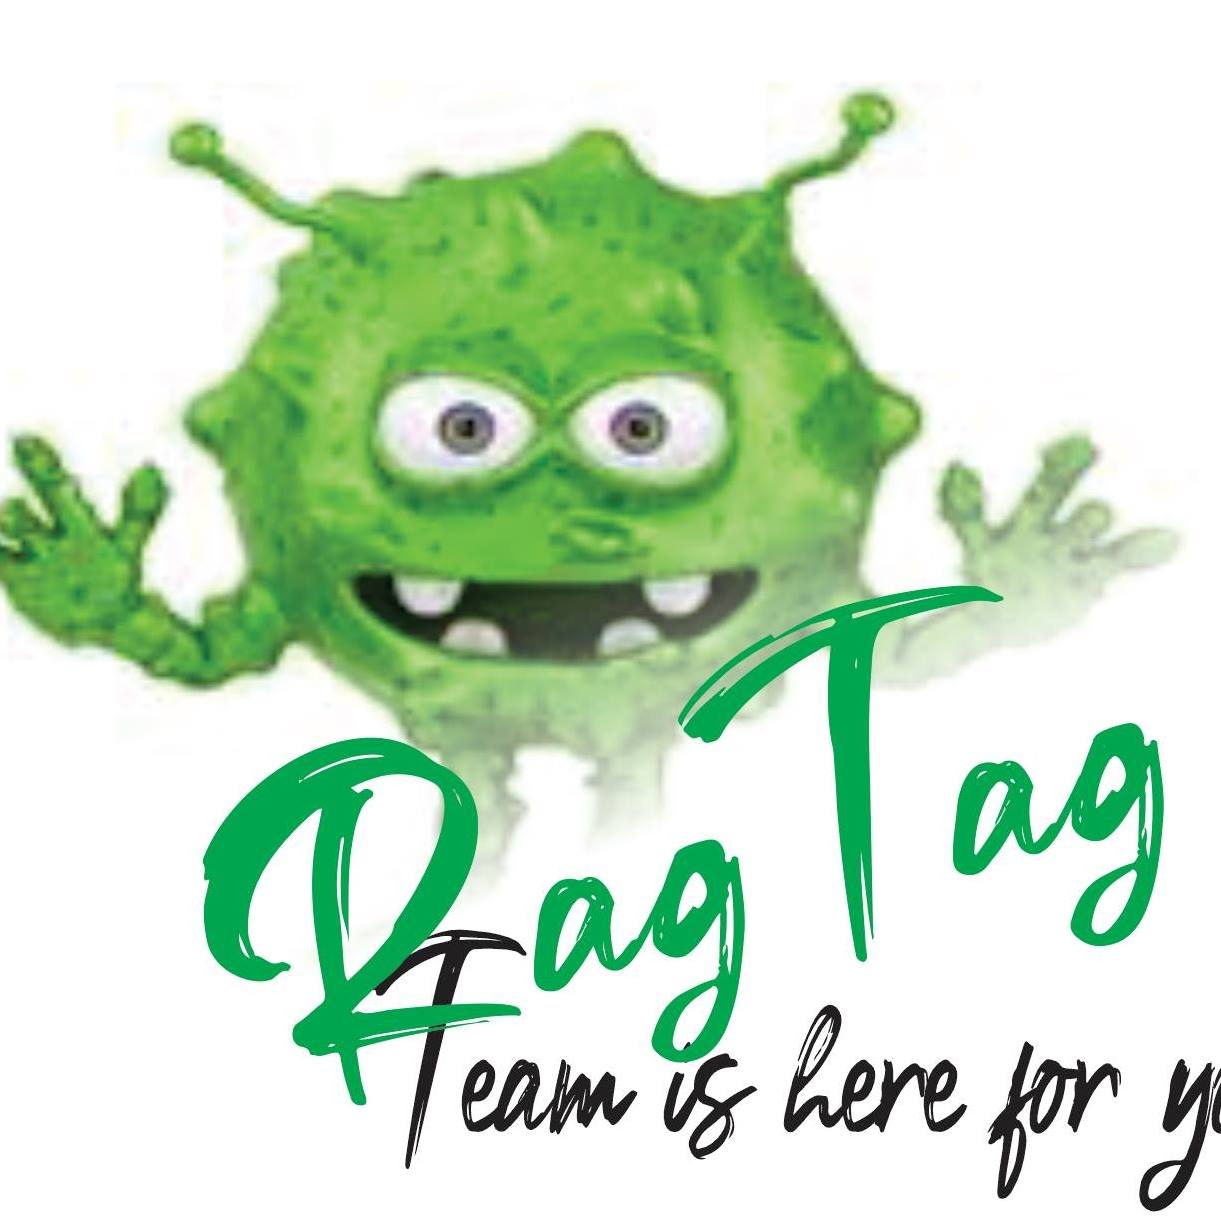 The Rag Tag Team The Rag Tag Team, Winterhaven California 92283